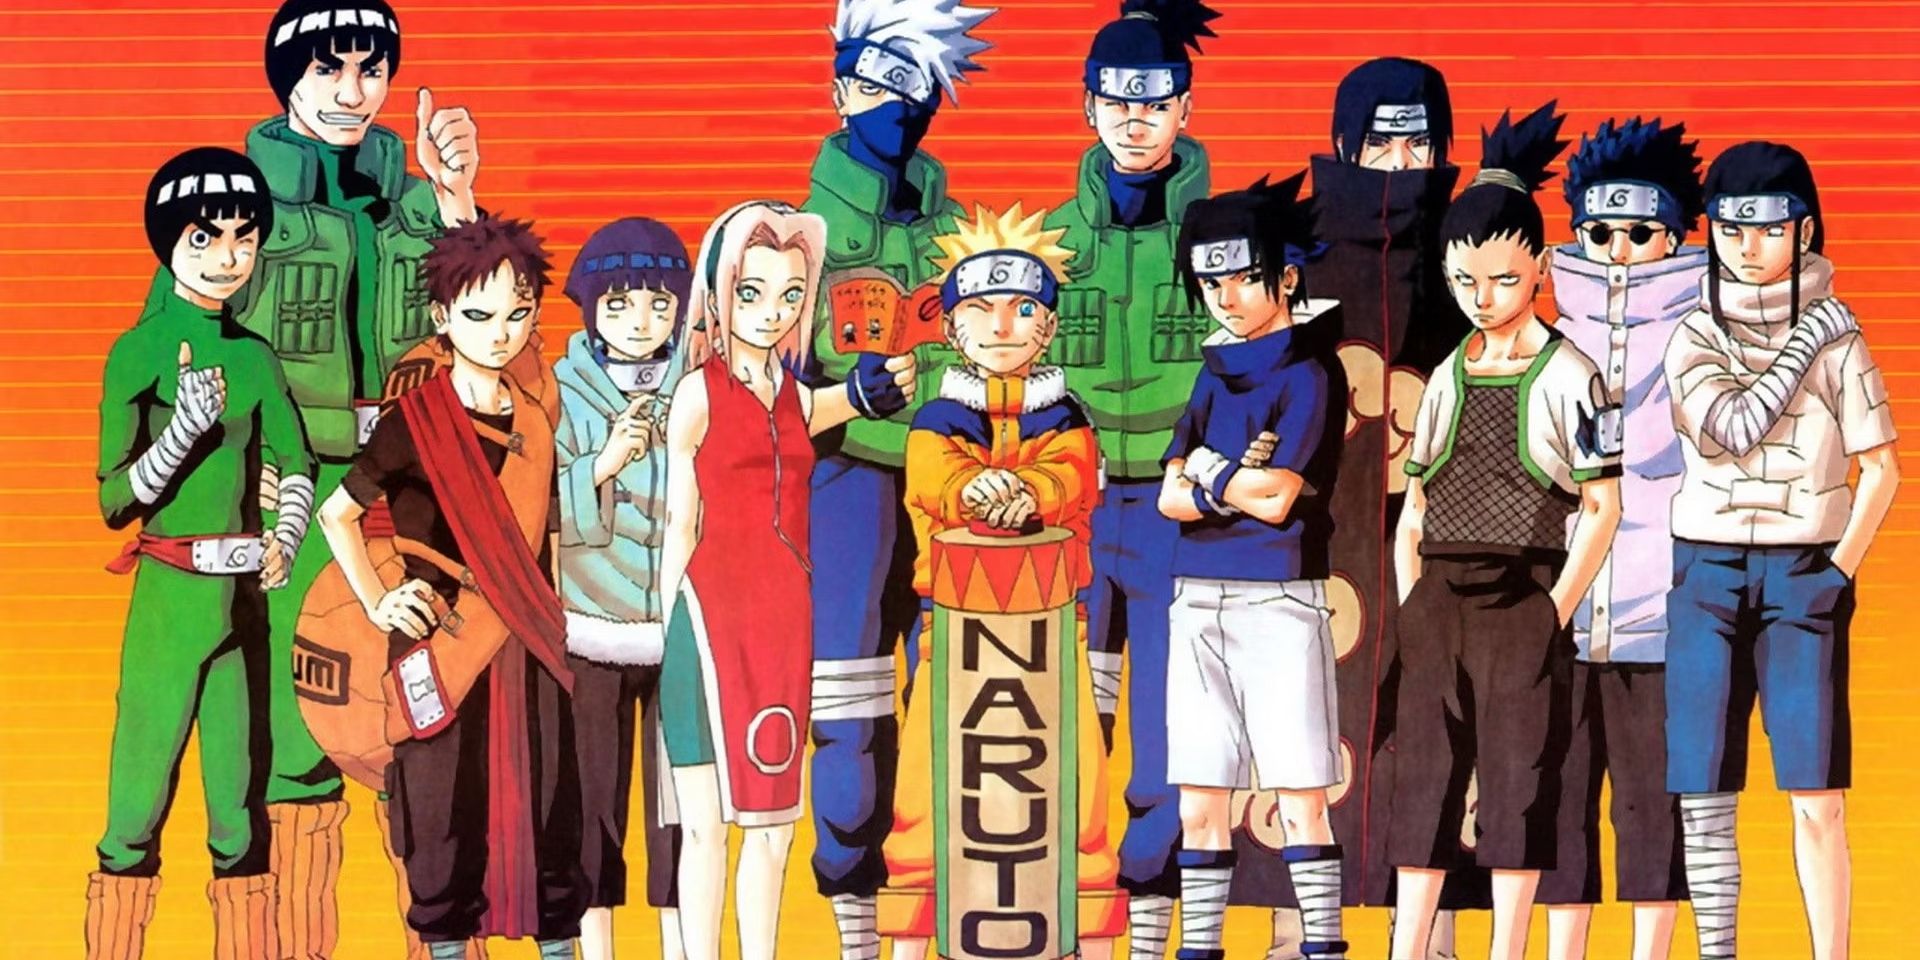 Naruto Part 1 Cast poses against an orange gradient backdrop.